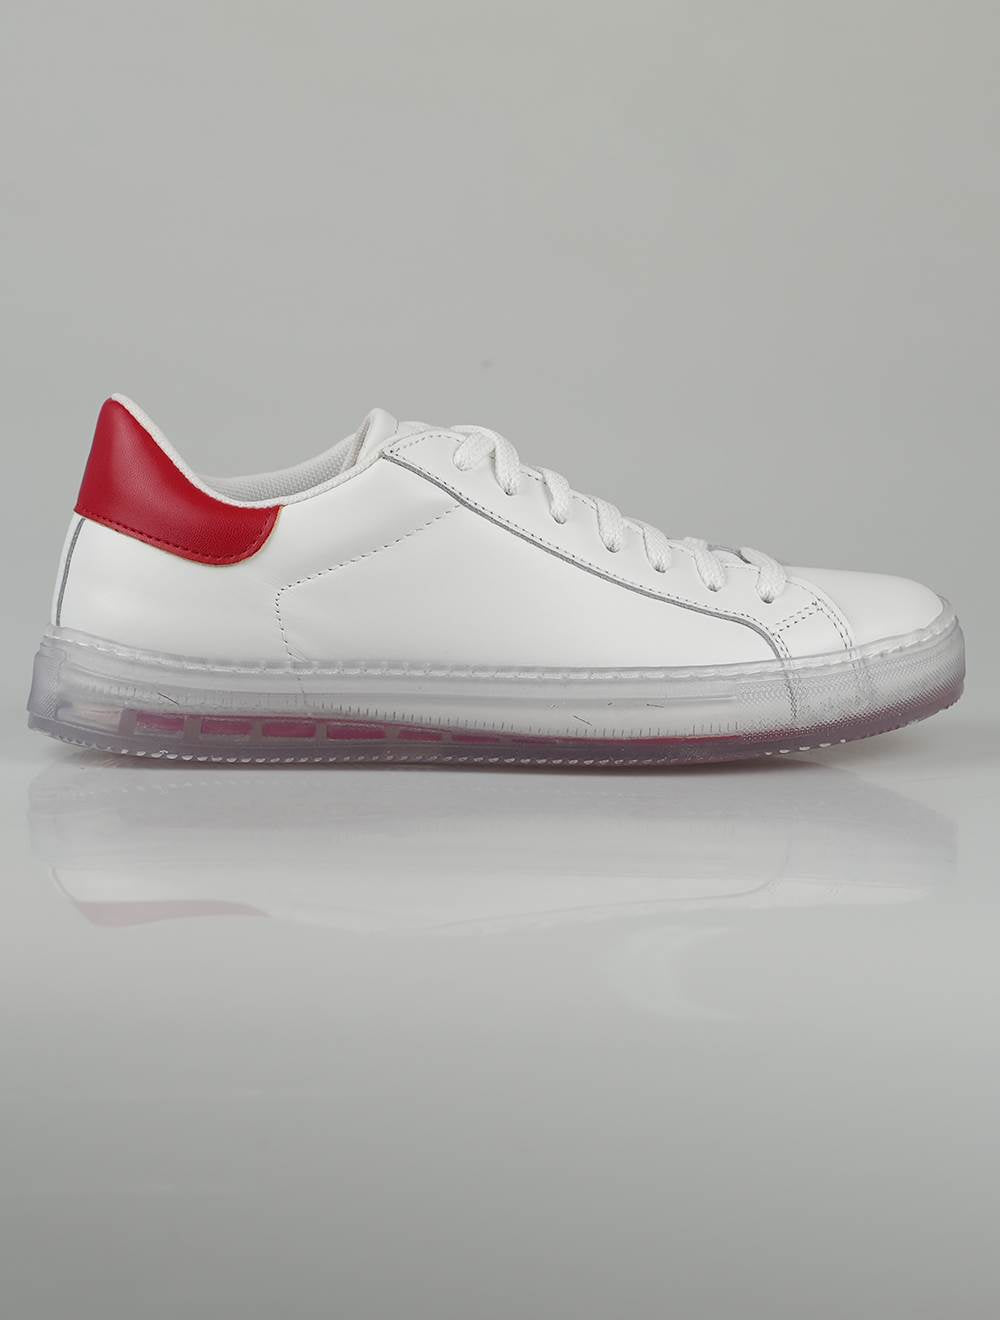 Kiton Hvid rød læder Sneakers Specialudgaver